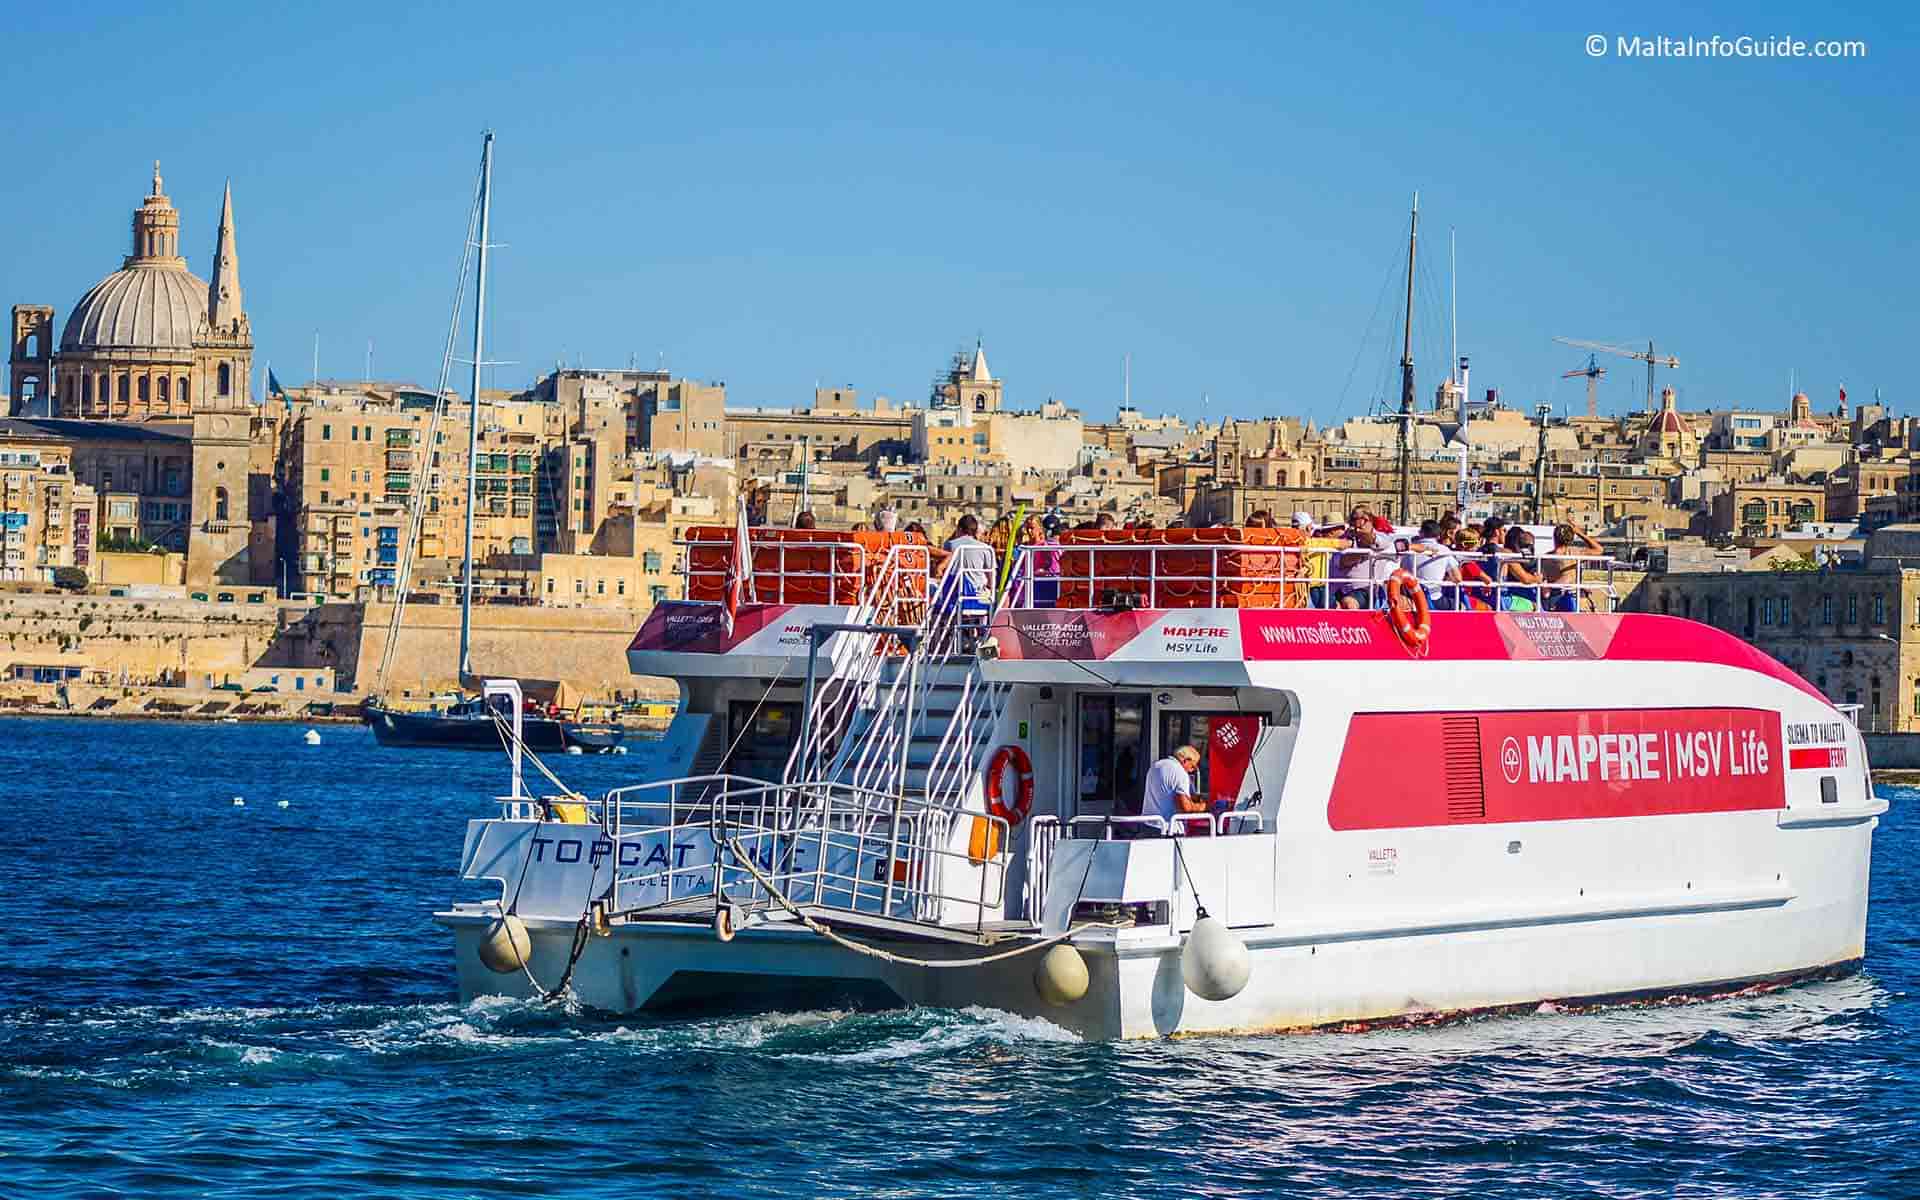 The Valletta ferry on its way to Valletta.